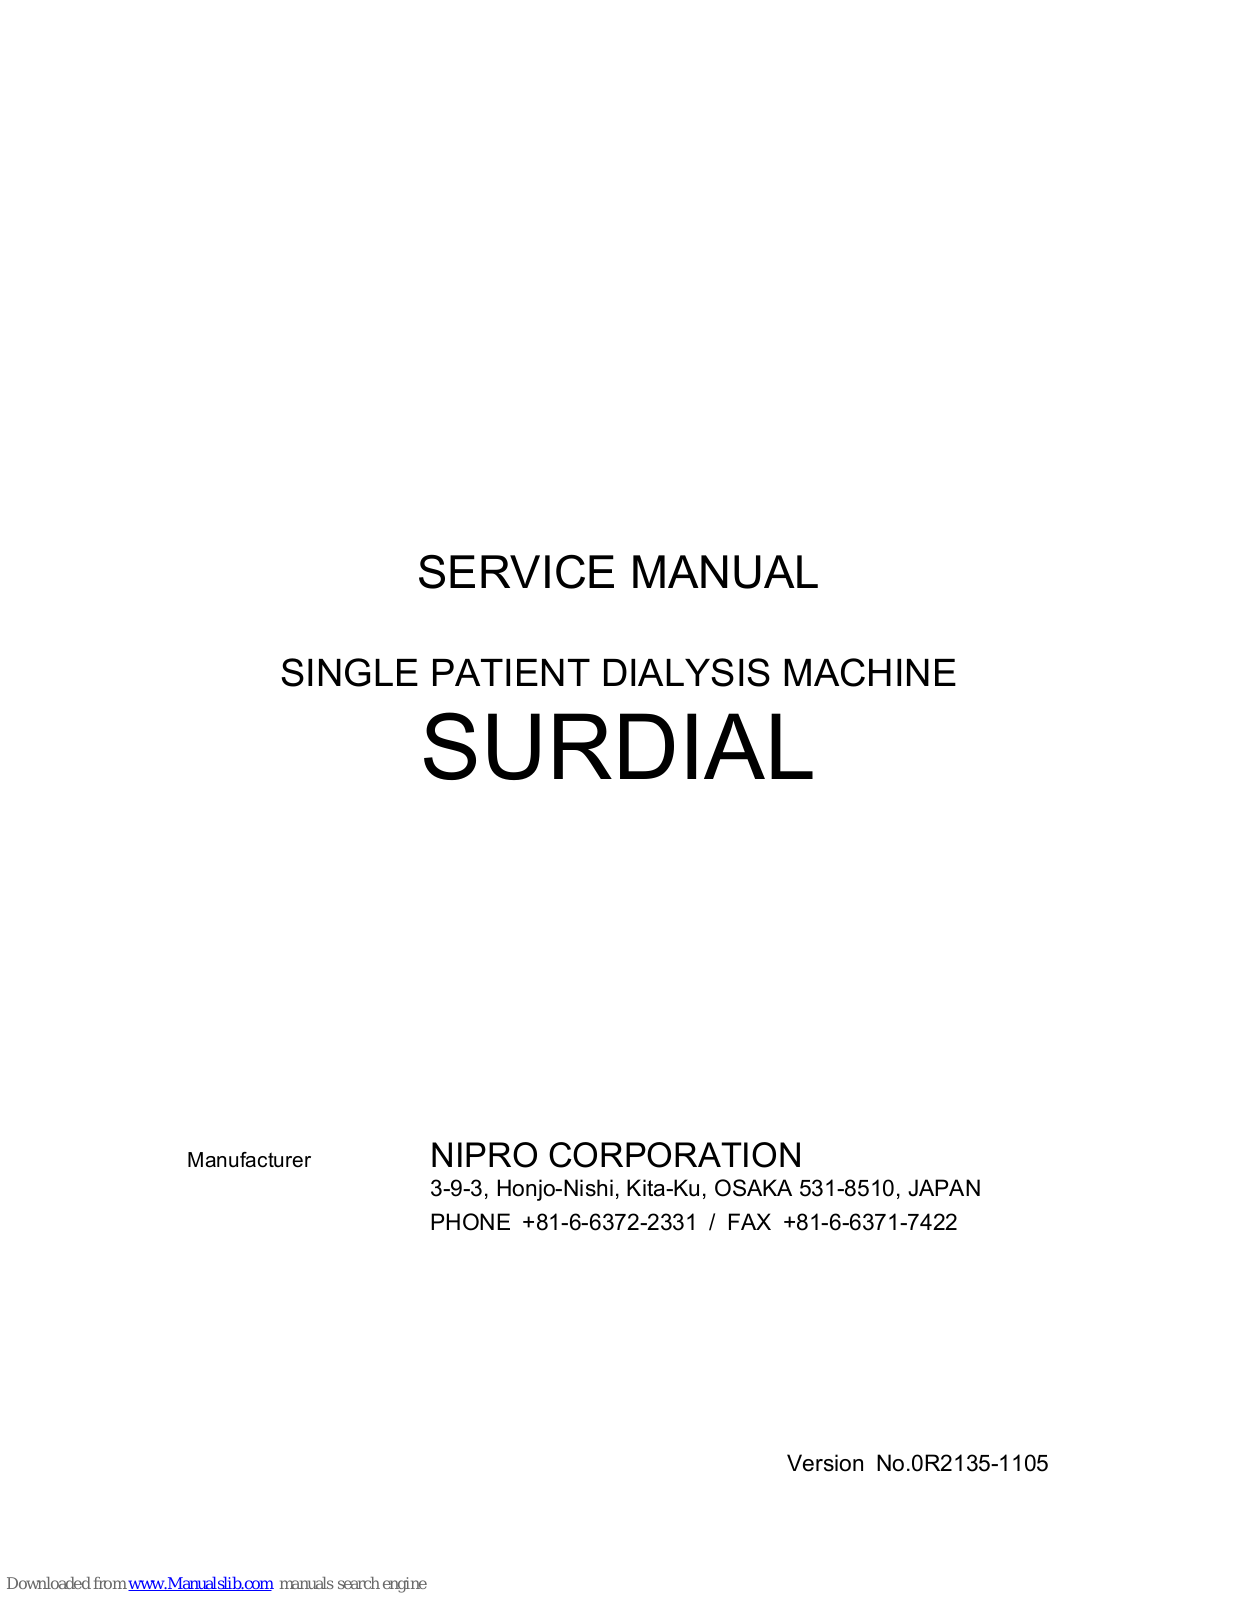 Nipro SURDIAL Service Manual